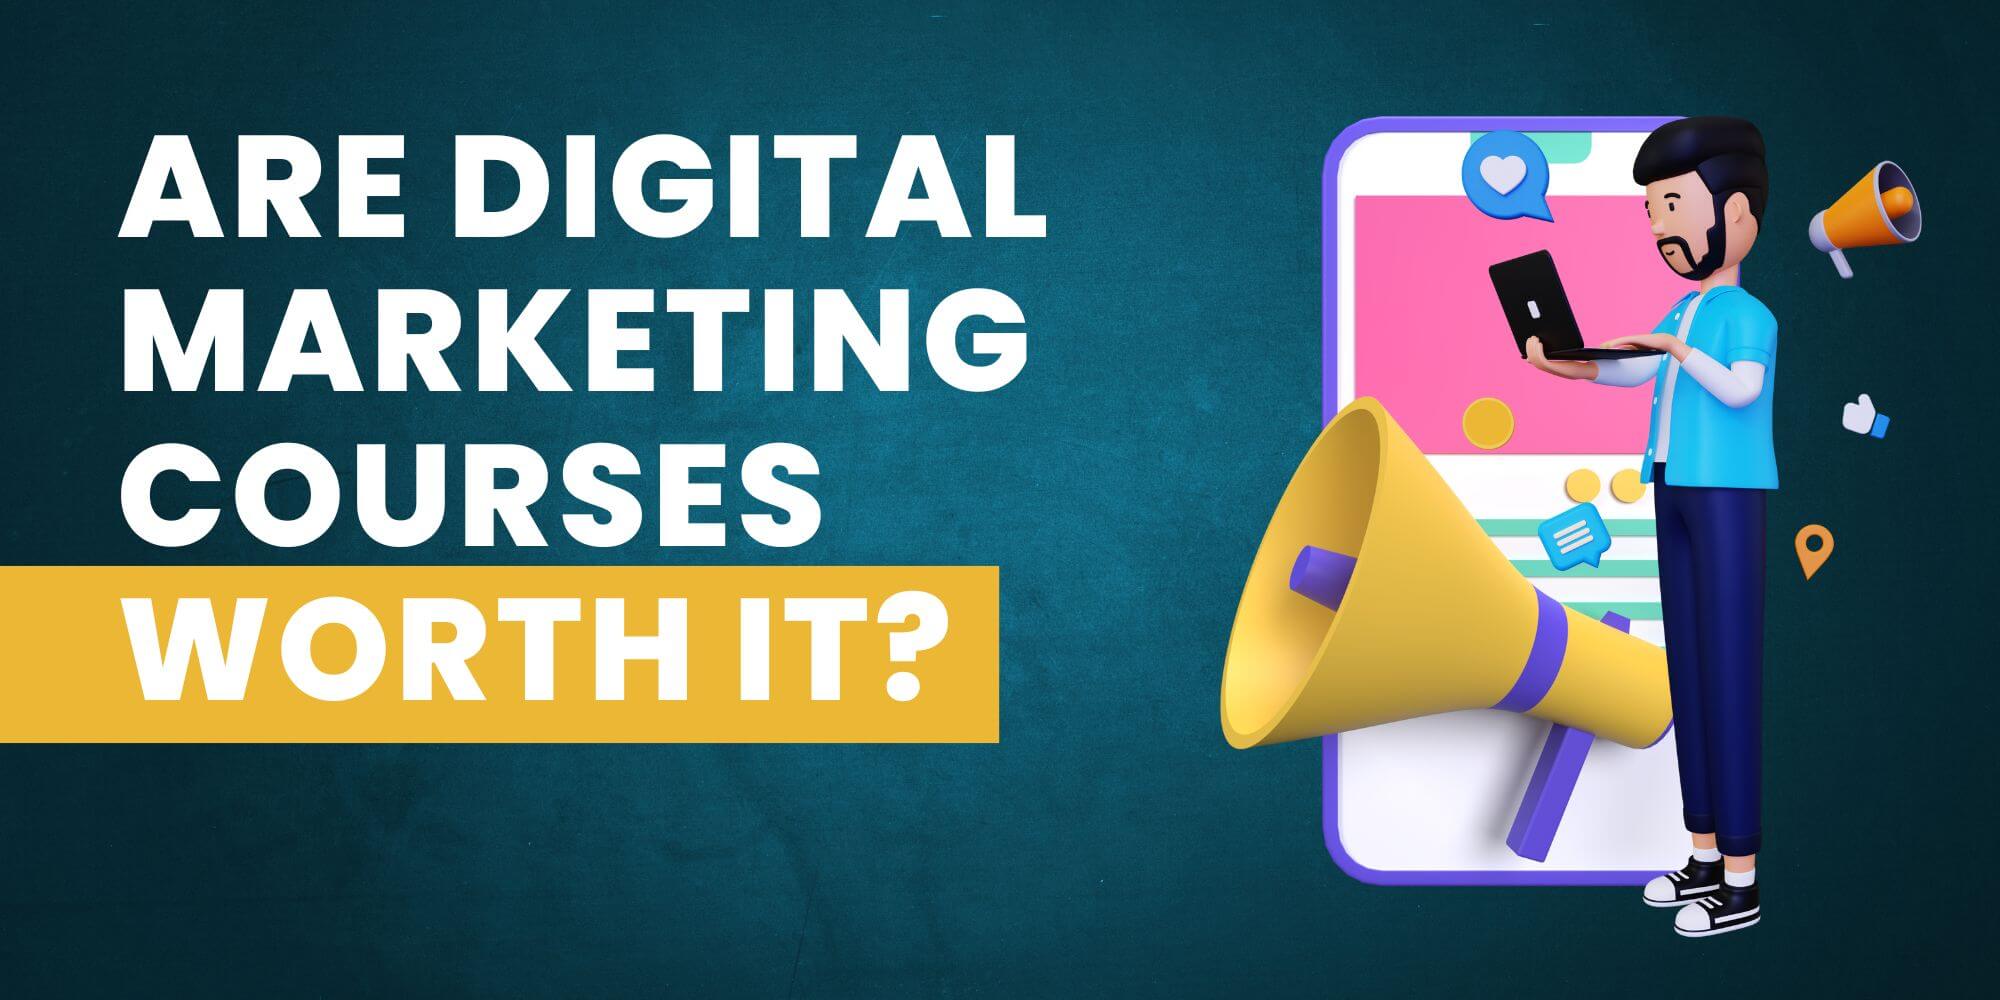 Are Digital Marketing Courses Worth It?